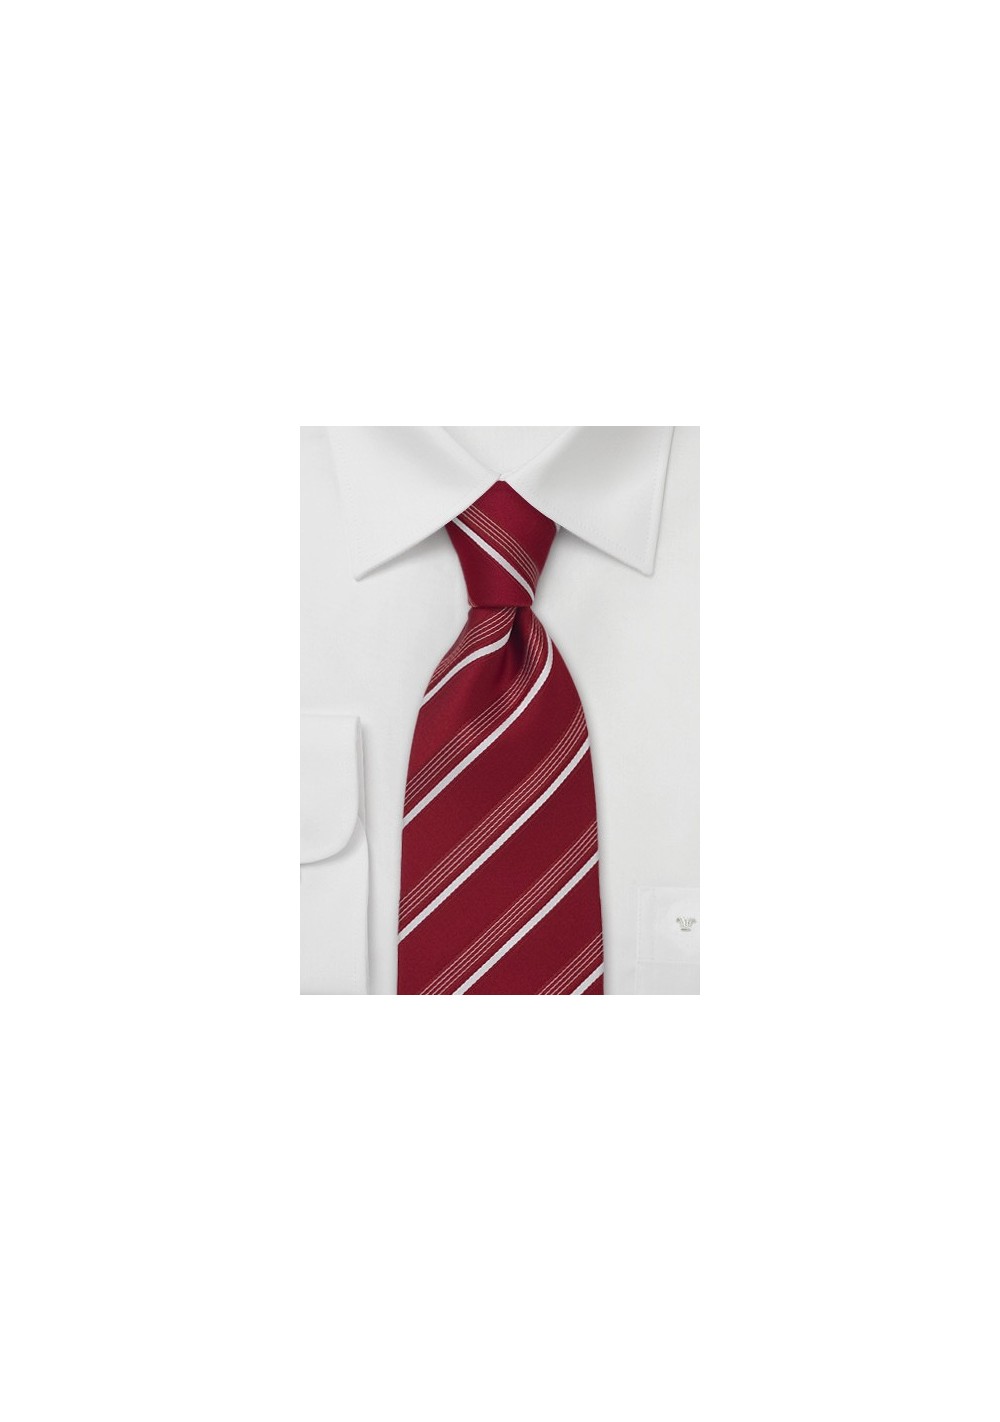 Cherry Red Italian Design Tie in XL